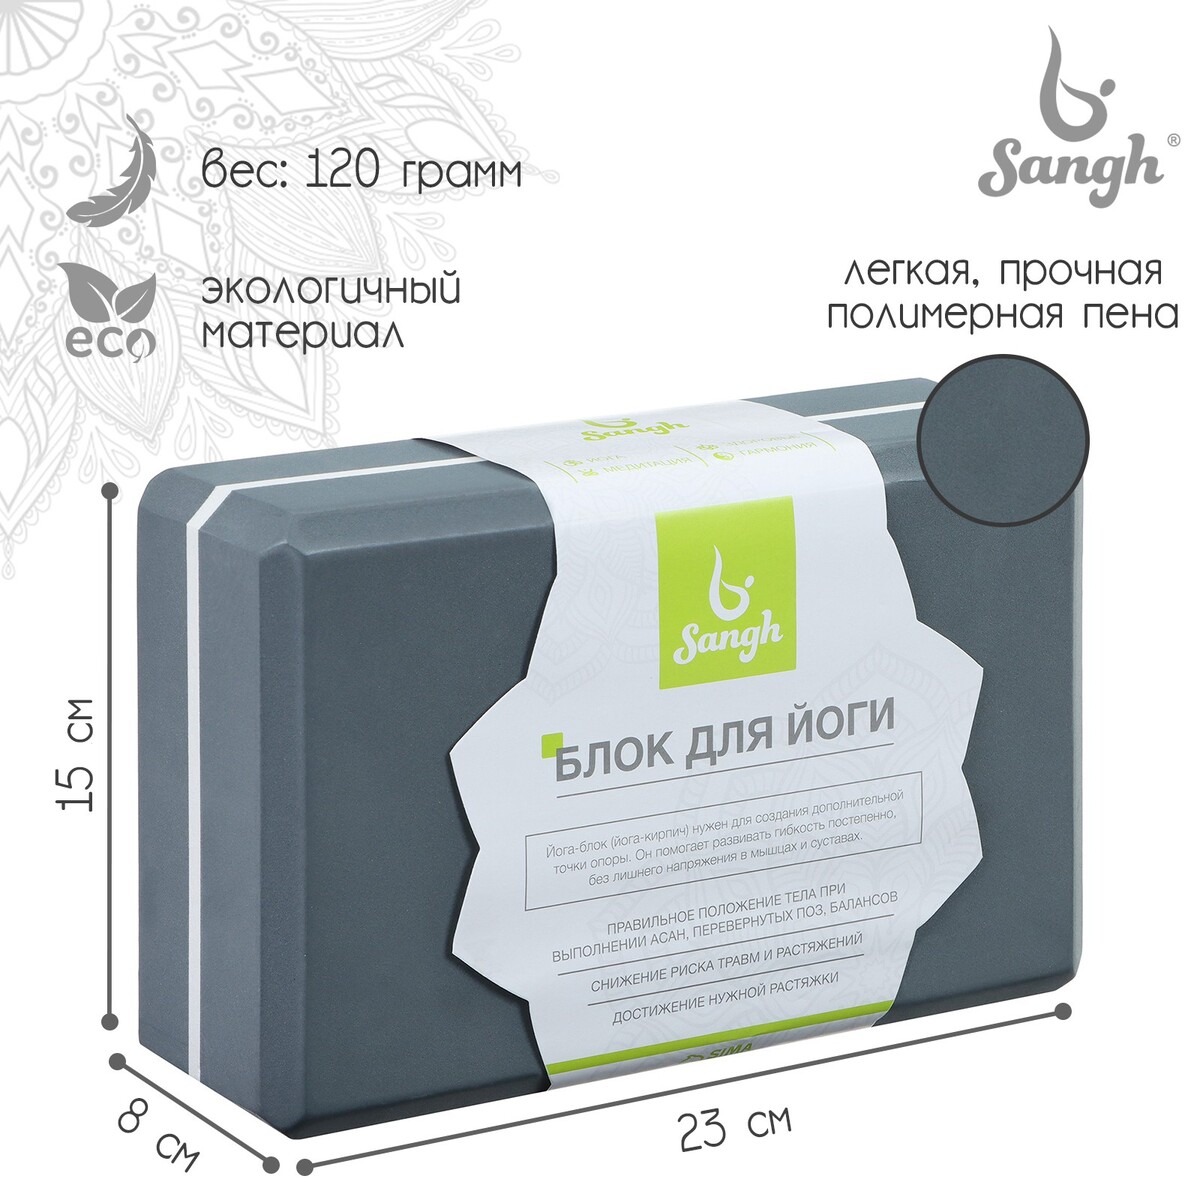 Блок для йоги sangh, 23х15х8 см, цвет серый блок для йоги airex eco cork block aa yogaecocb